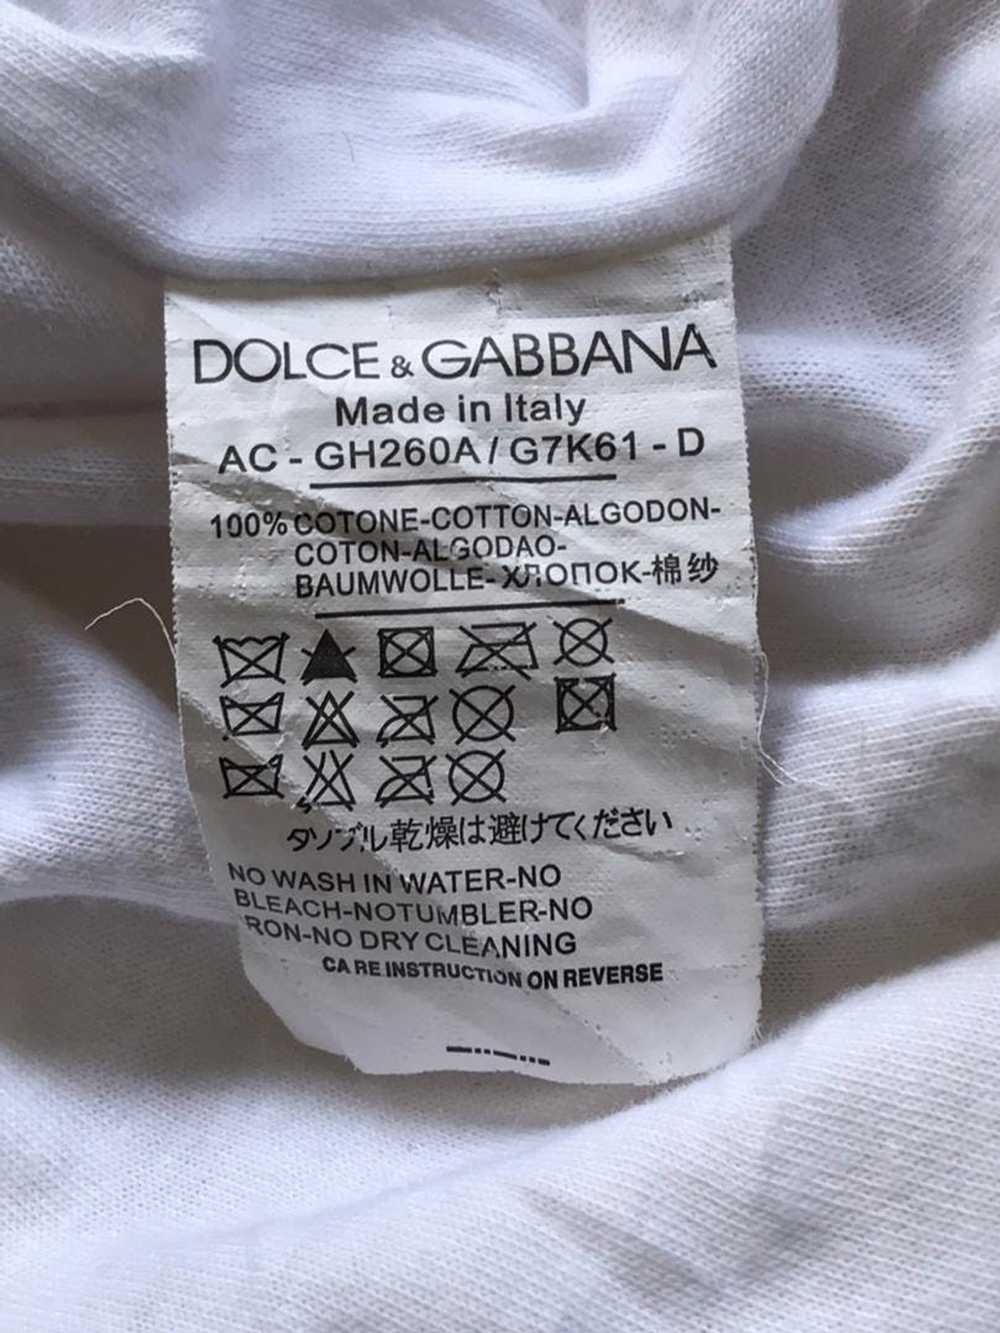 Dolce & Gabbana DOLCE & GABANA ZIPPER JACKET - image 6